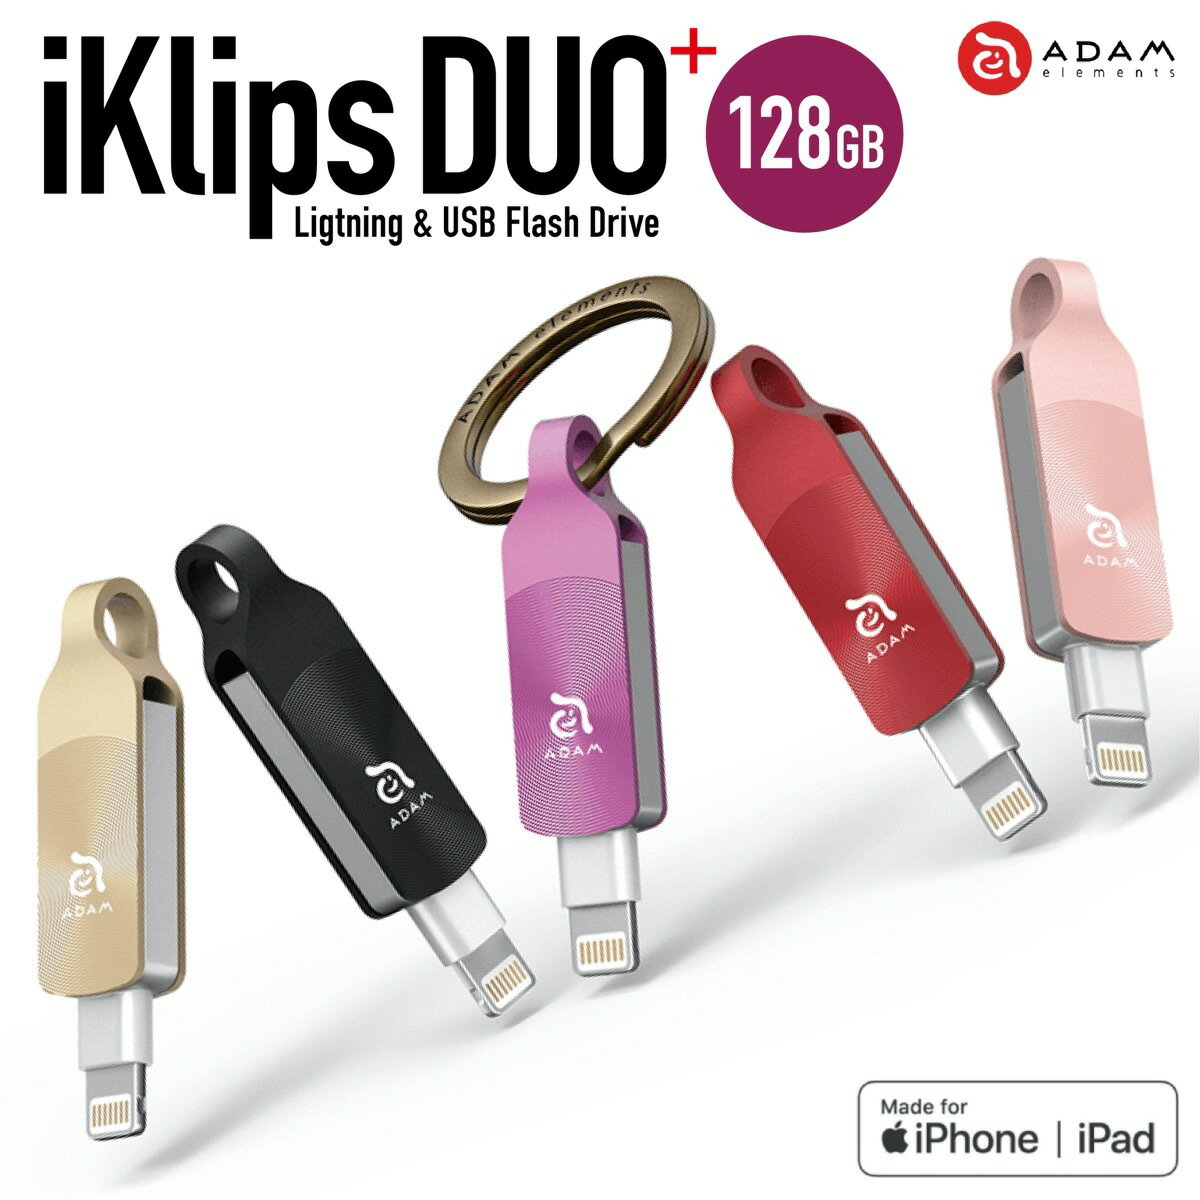 ADAM elements iKlips DUO+ 128GB Lightning USBメモリ USB3.1 iPhone iPad MFi認証 ライトニング 簡単 バックアップ 拡張 アイクリプス デュオ アダムエレメンツ (3C)iKlipsDUO+128GB